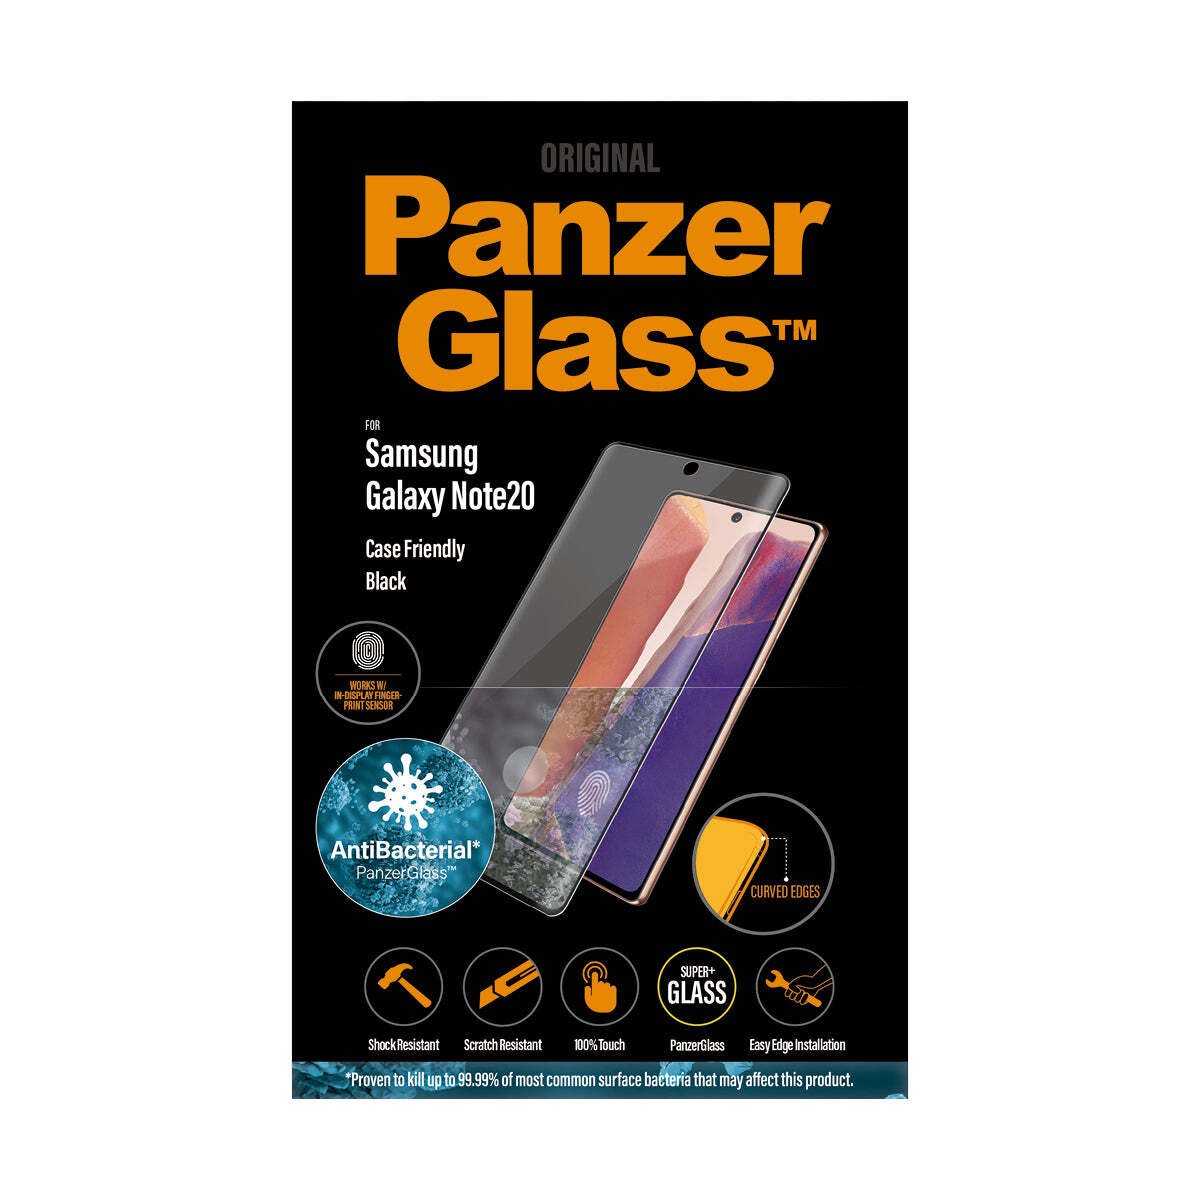 Panzerglass Fingerprint Case Friendly Screen Protector For Samsung Galaxy Note 20 - Black Frame